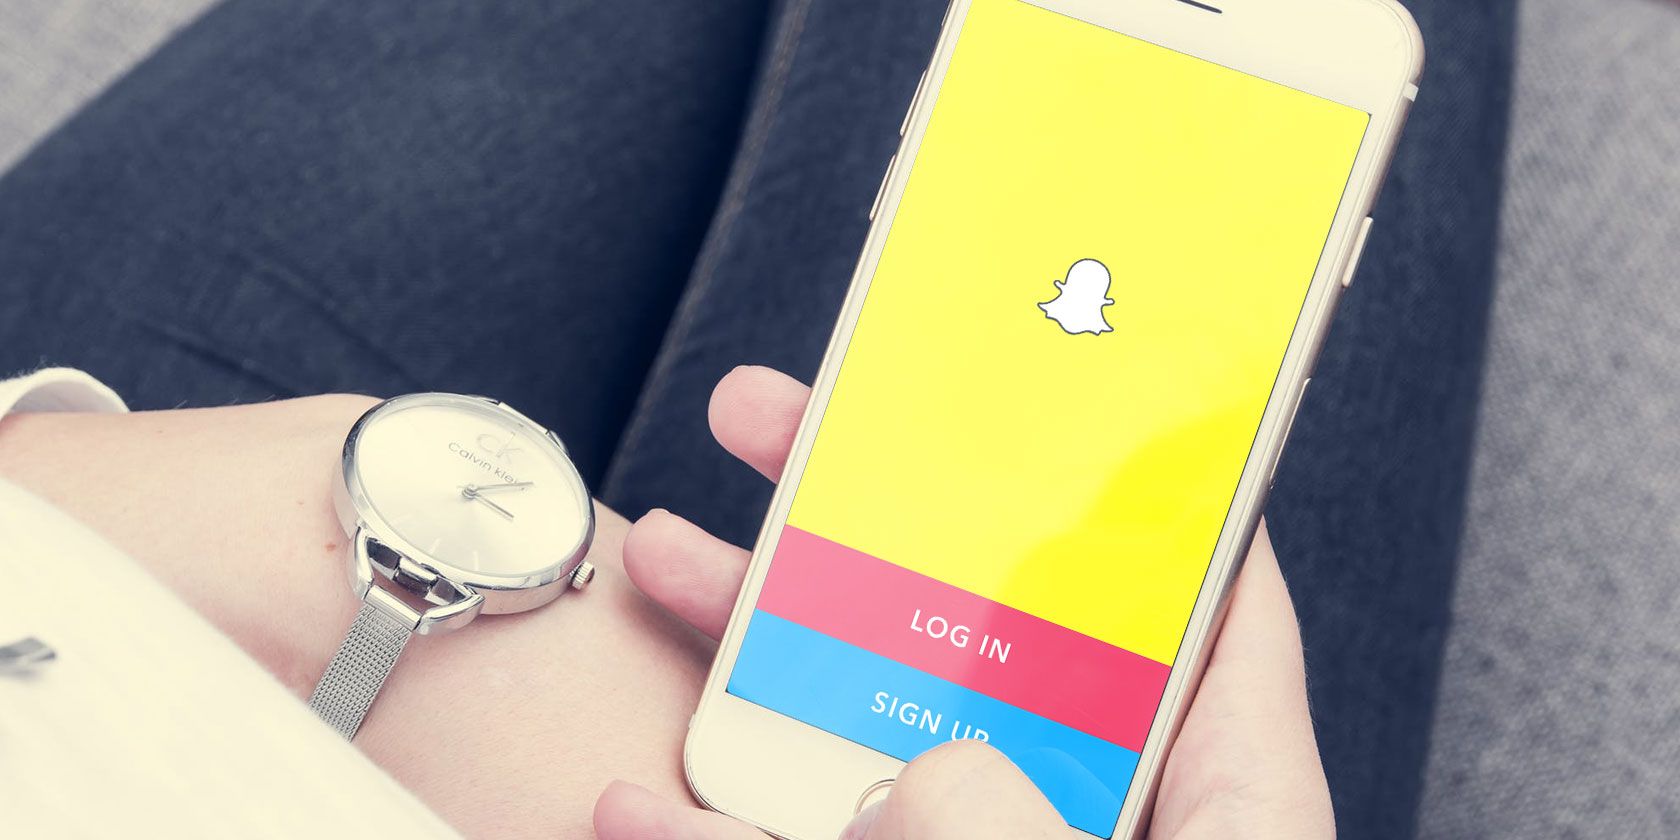 Snapchat wants stop filming